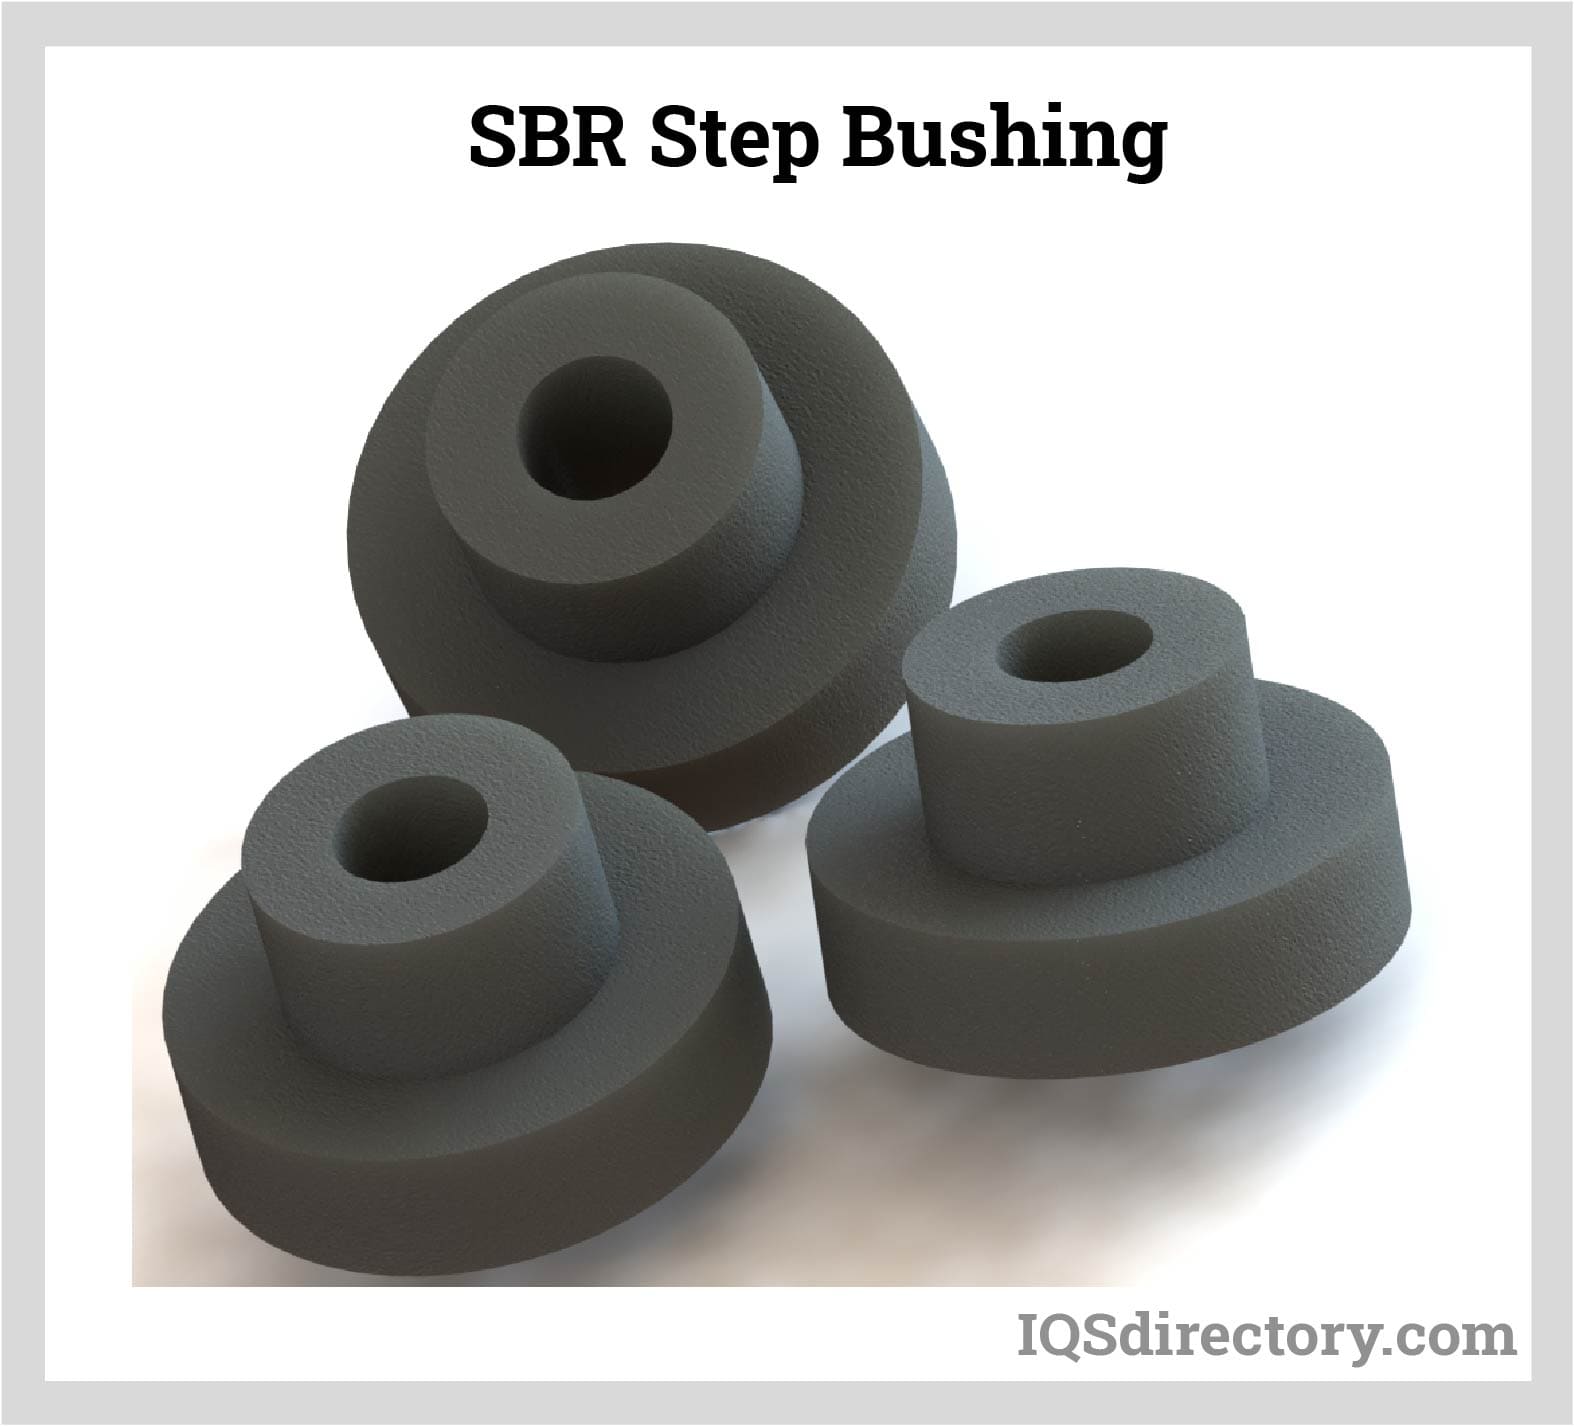 SBR Step Bushing